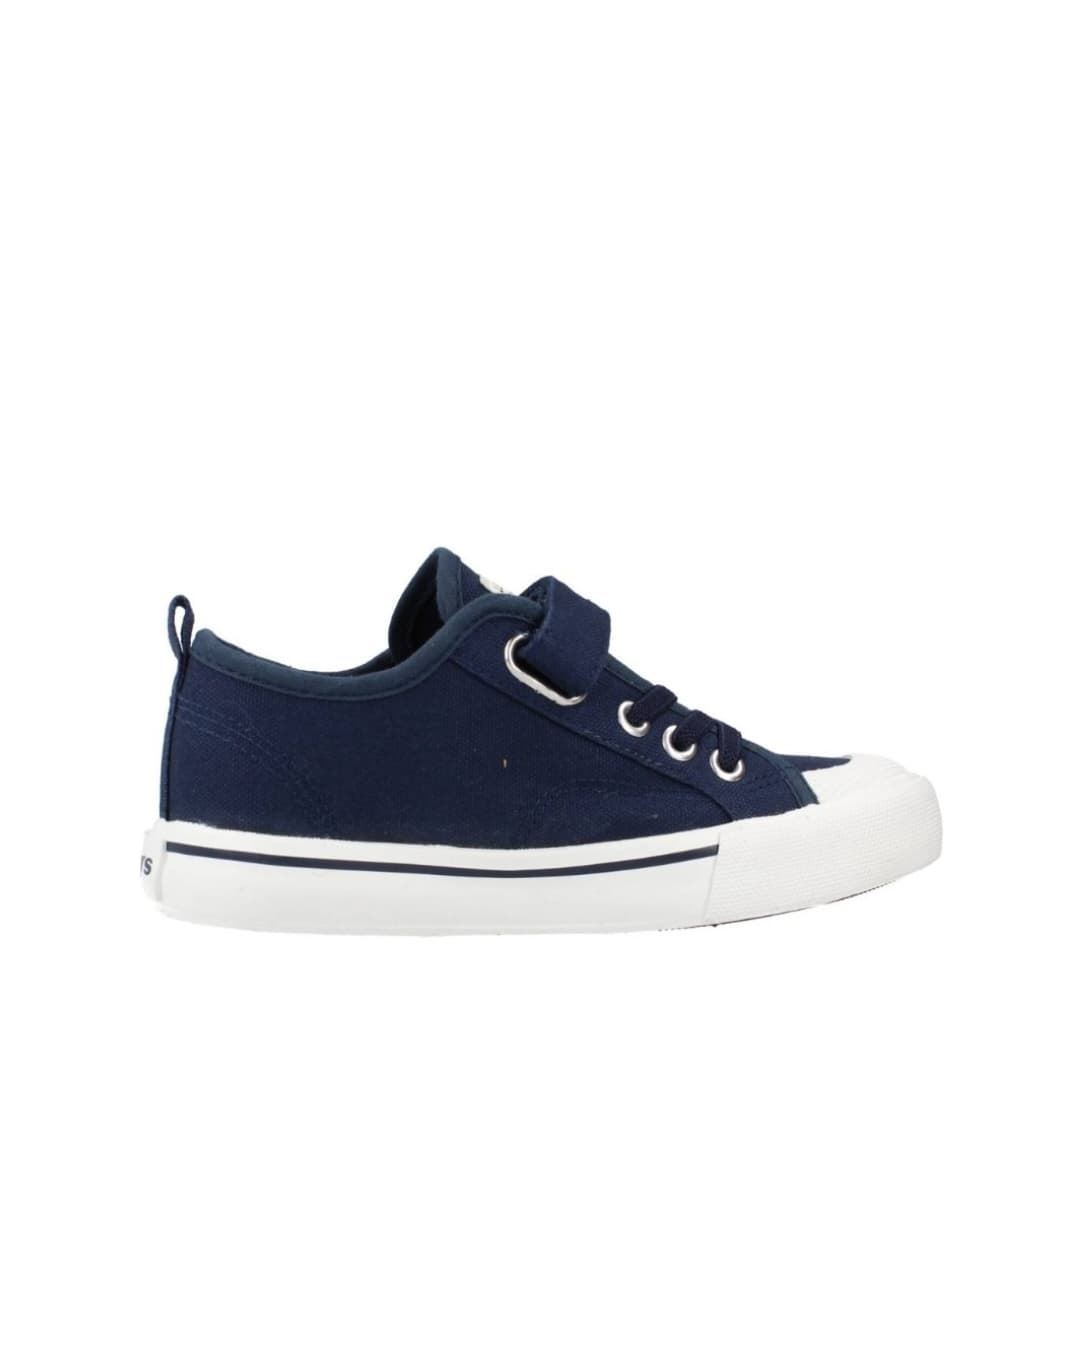 Levi's Unisex Kids Navy Blue Canvas Sneakers - Image 3